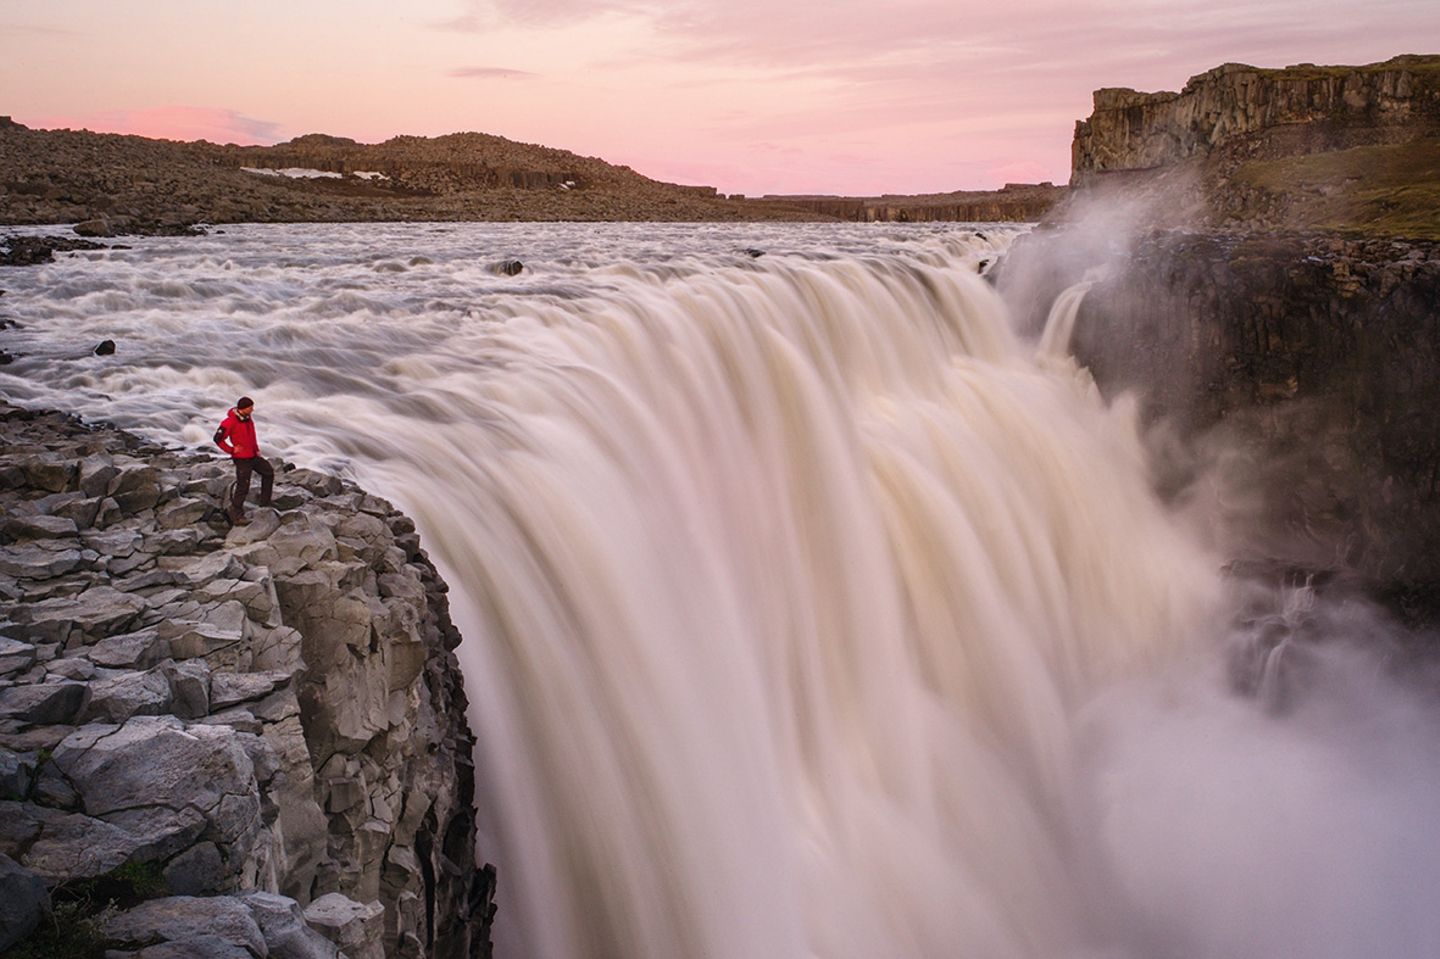 Wasserfall auf Island